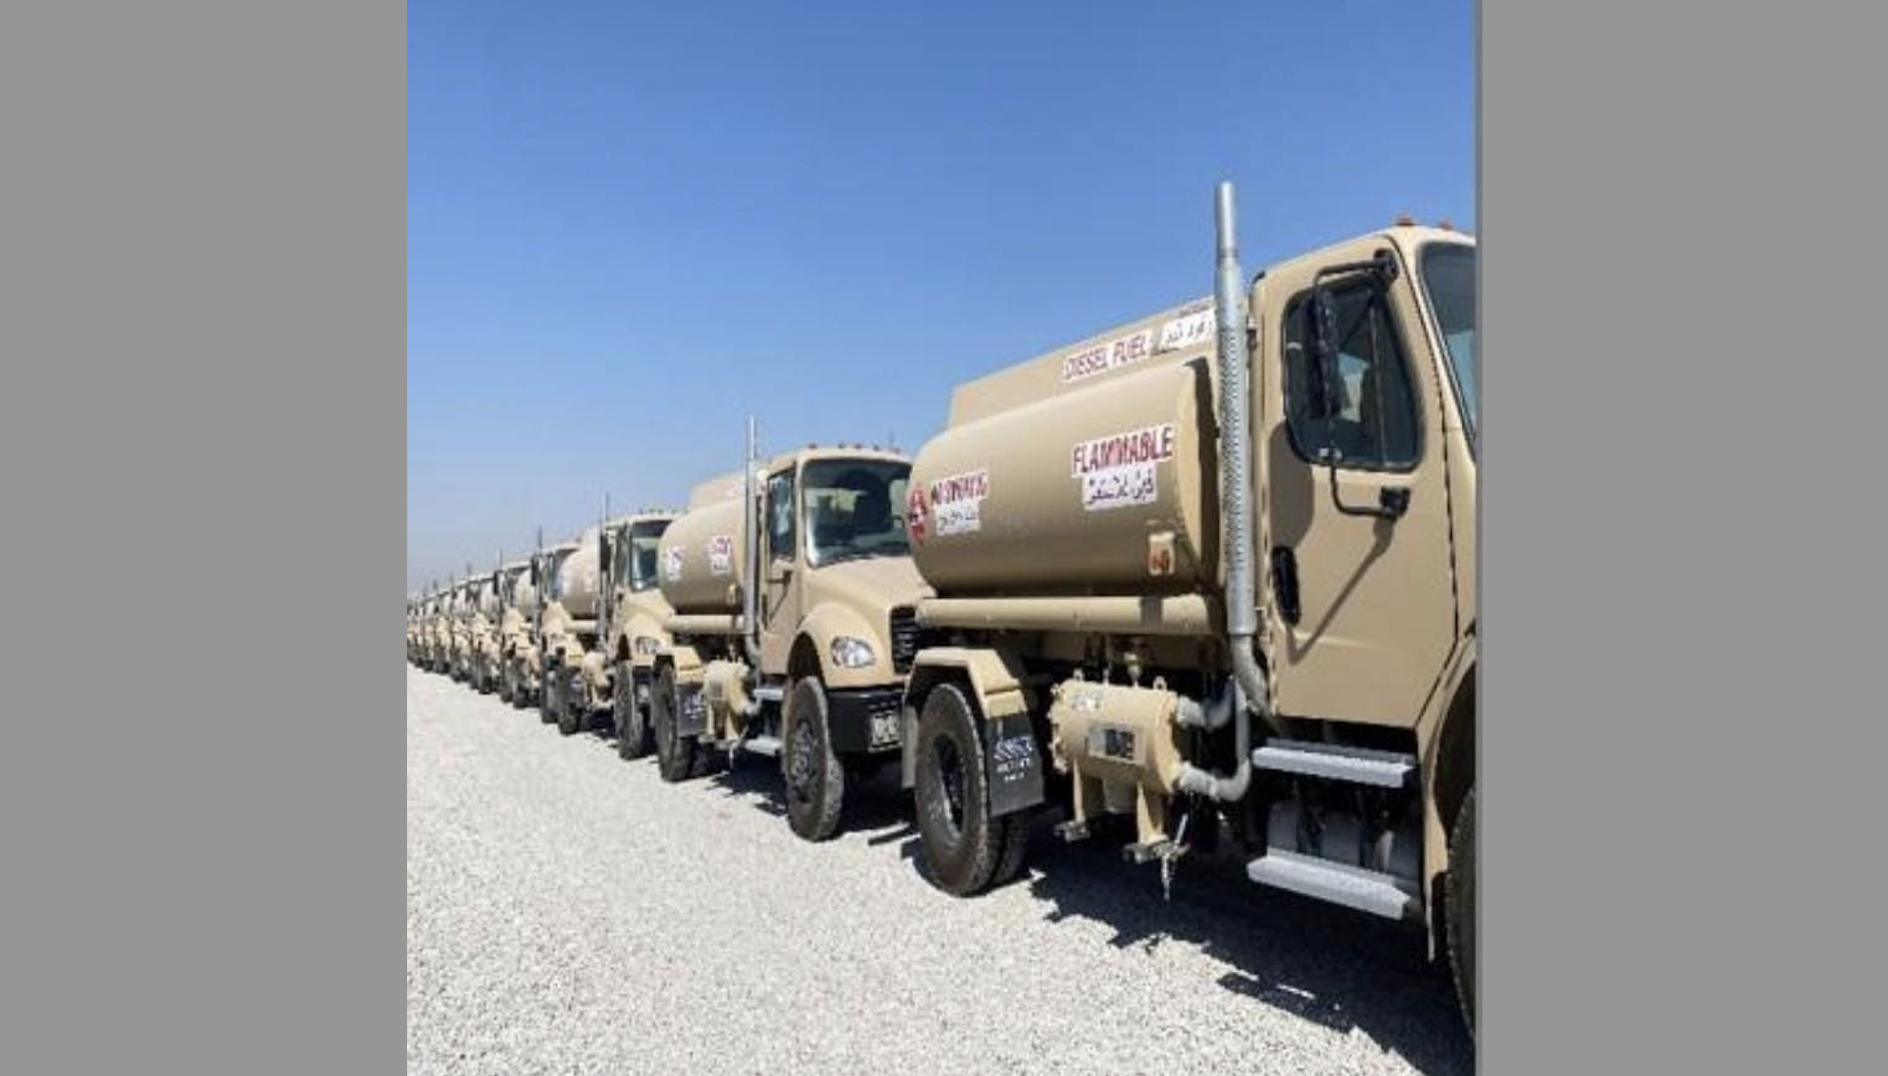 The coalition provides the Peshmerga with equipment worth +4 million USD